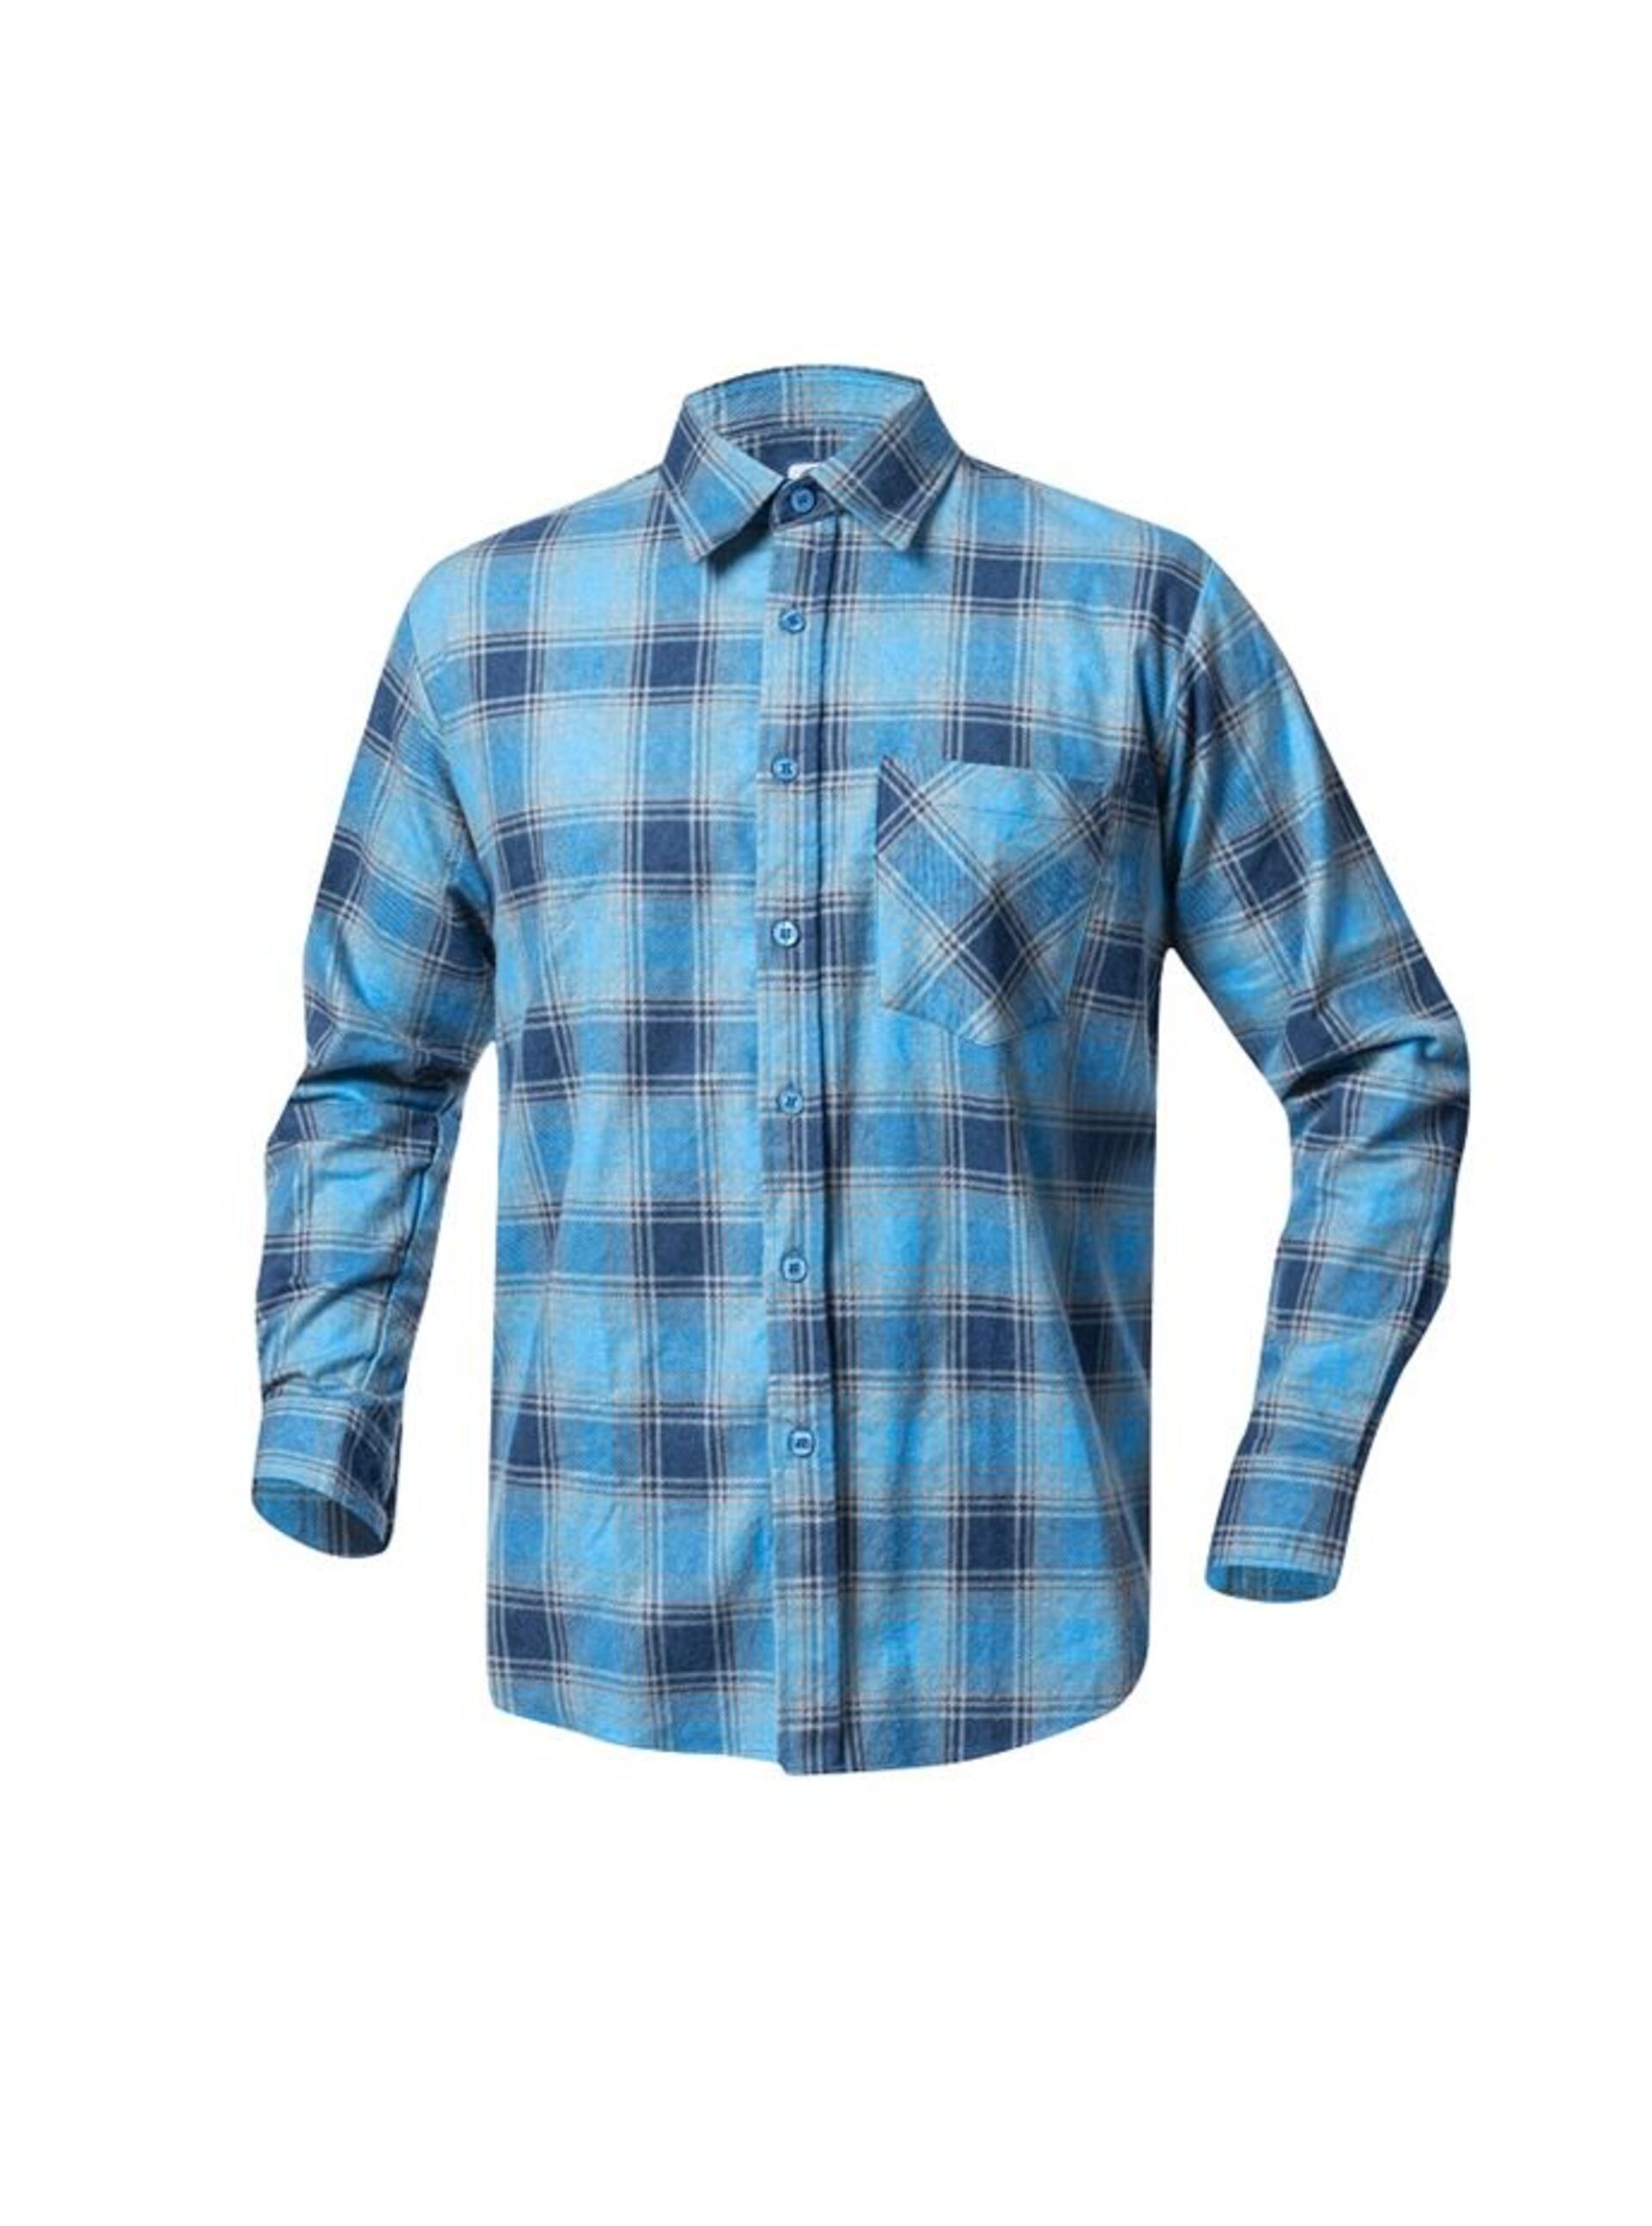 Ardon URBAN Košile pánská flanelová modrá 43/44 XL